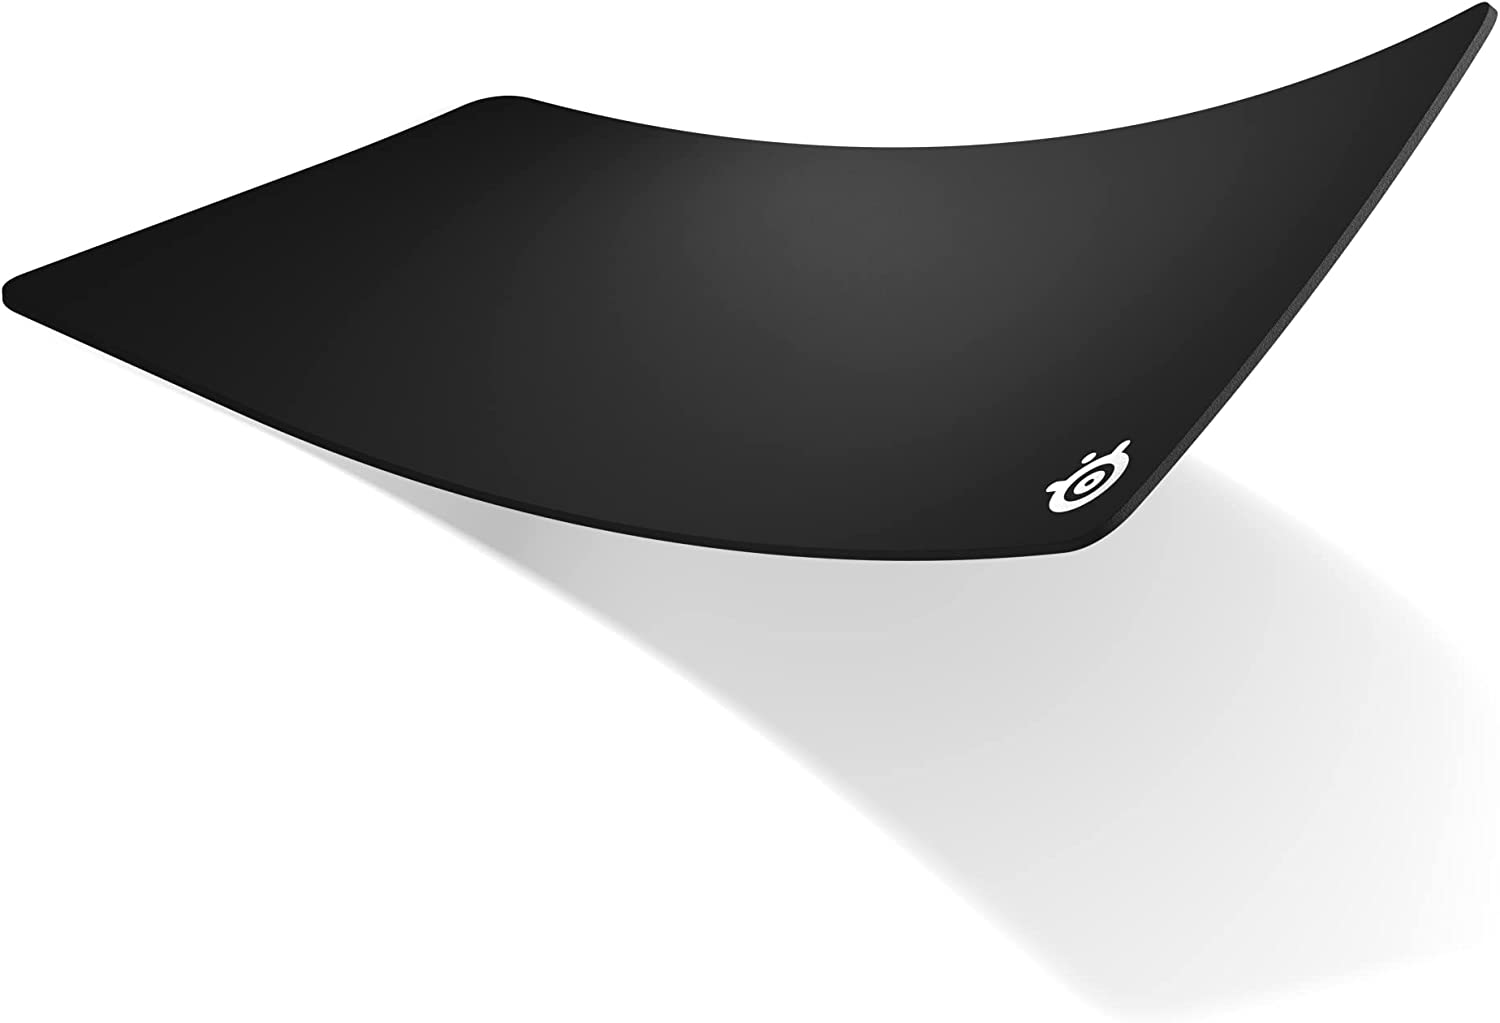 SteelSeries製XXLサイズの大型マウスパッドがAmazonでセール中！ 耐久